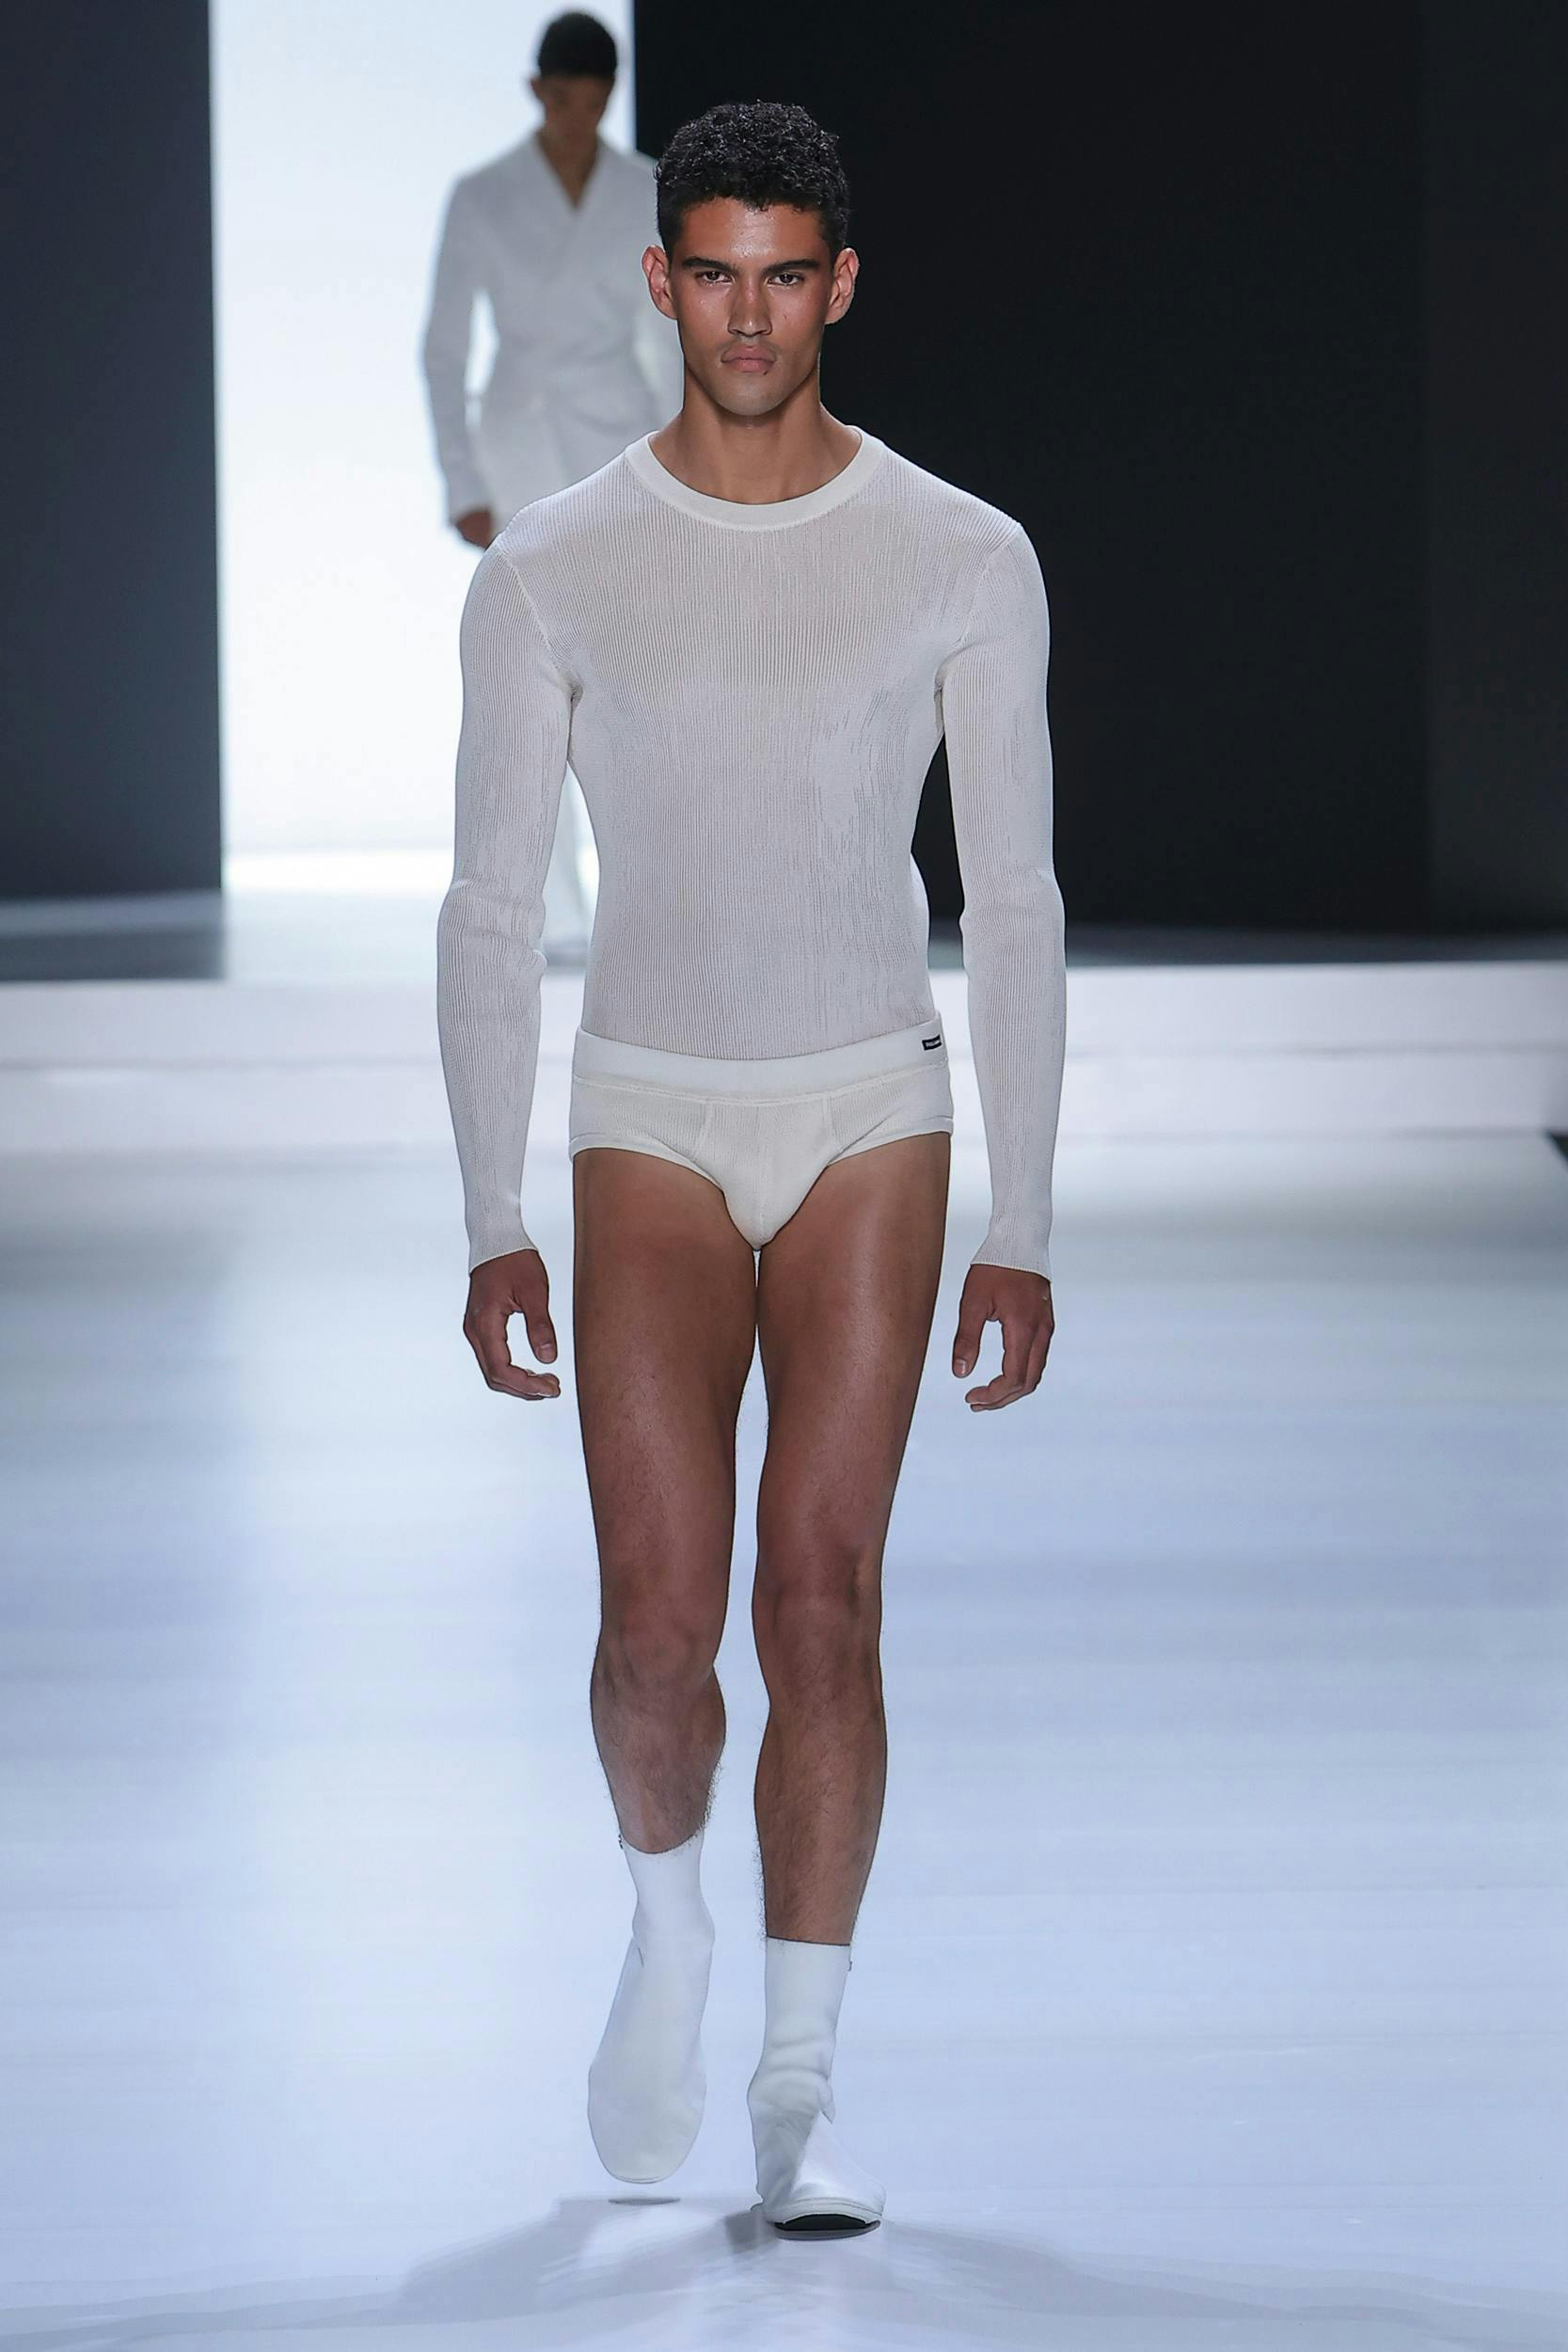 clothing long sleeve sleeve fashion undershirt adult male man person